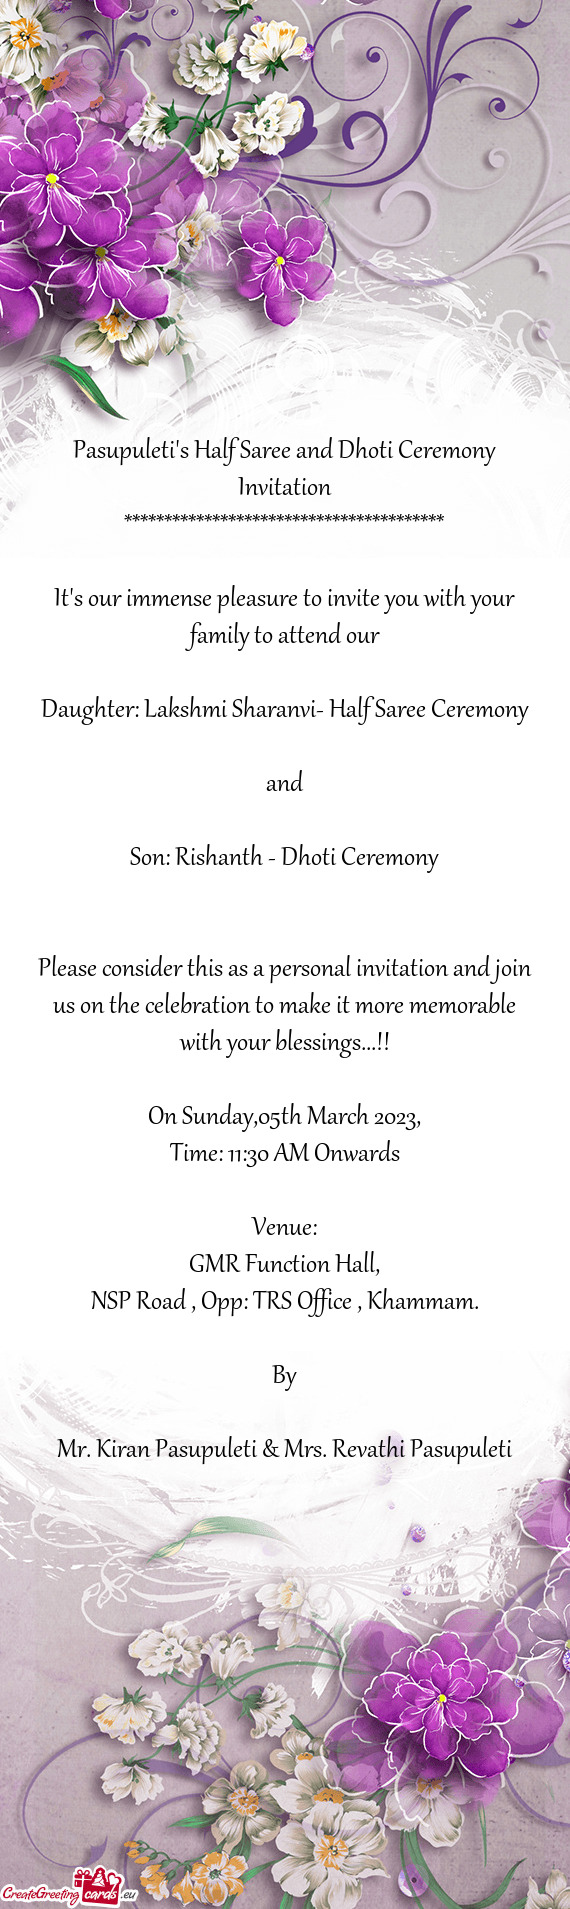 Daughter: Lakshmi Sharanvi- Half Saree Ceremony